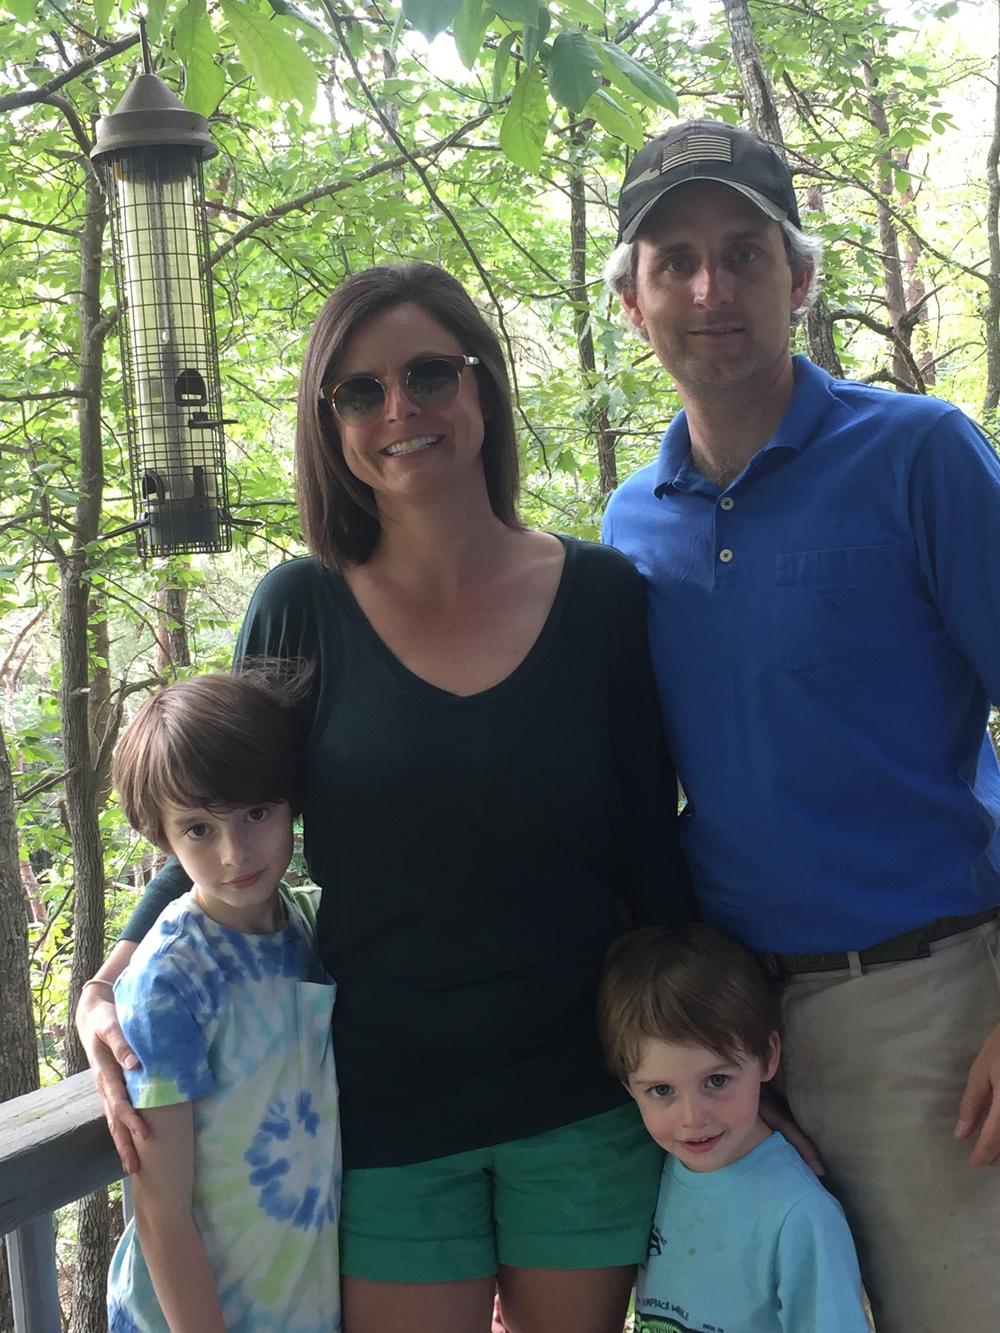 The Sanders family left Atlanta to spend their coronavirus quarantine in rural Alabama.